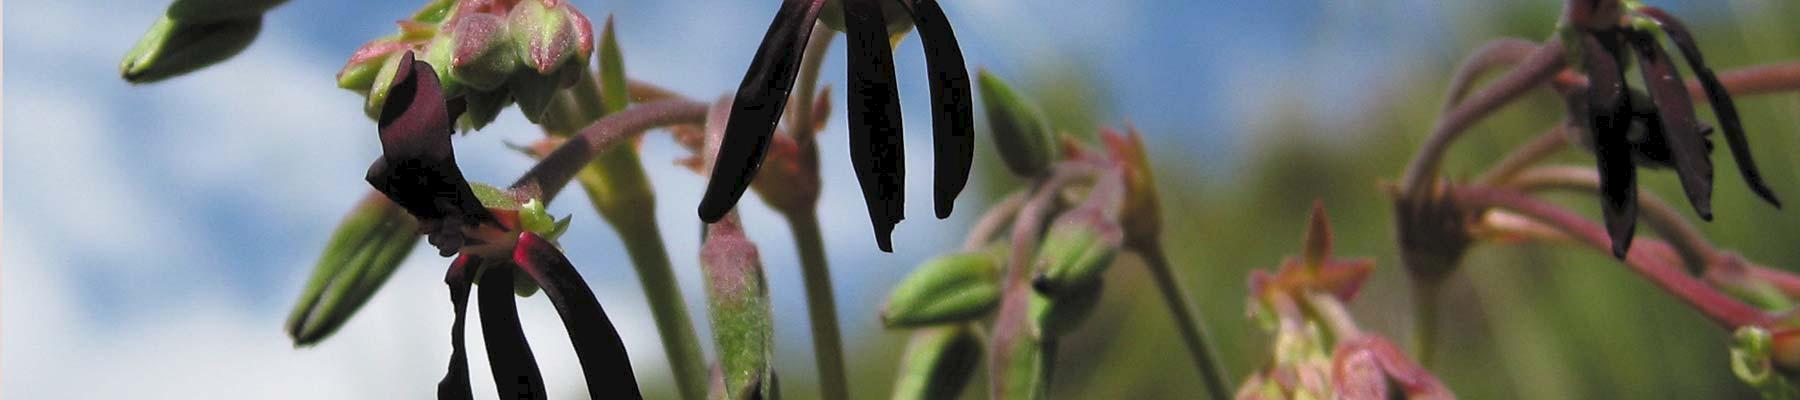 Pelargonium sidoides © Britta Paetzold 